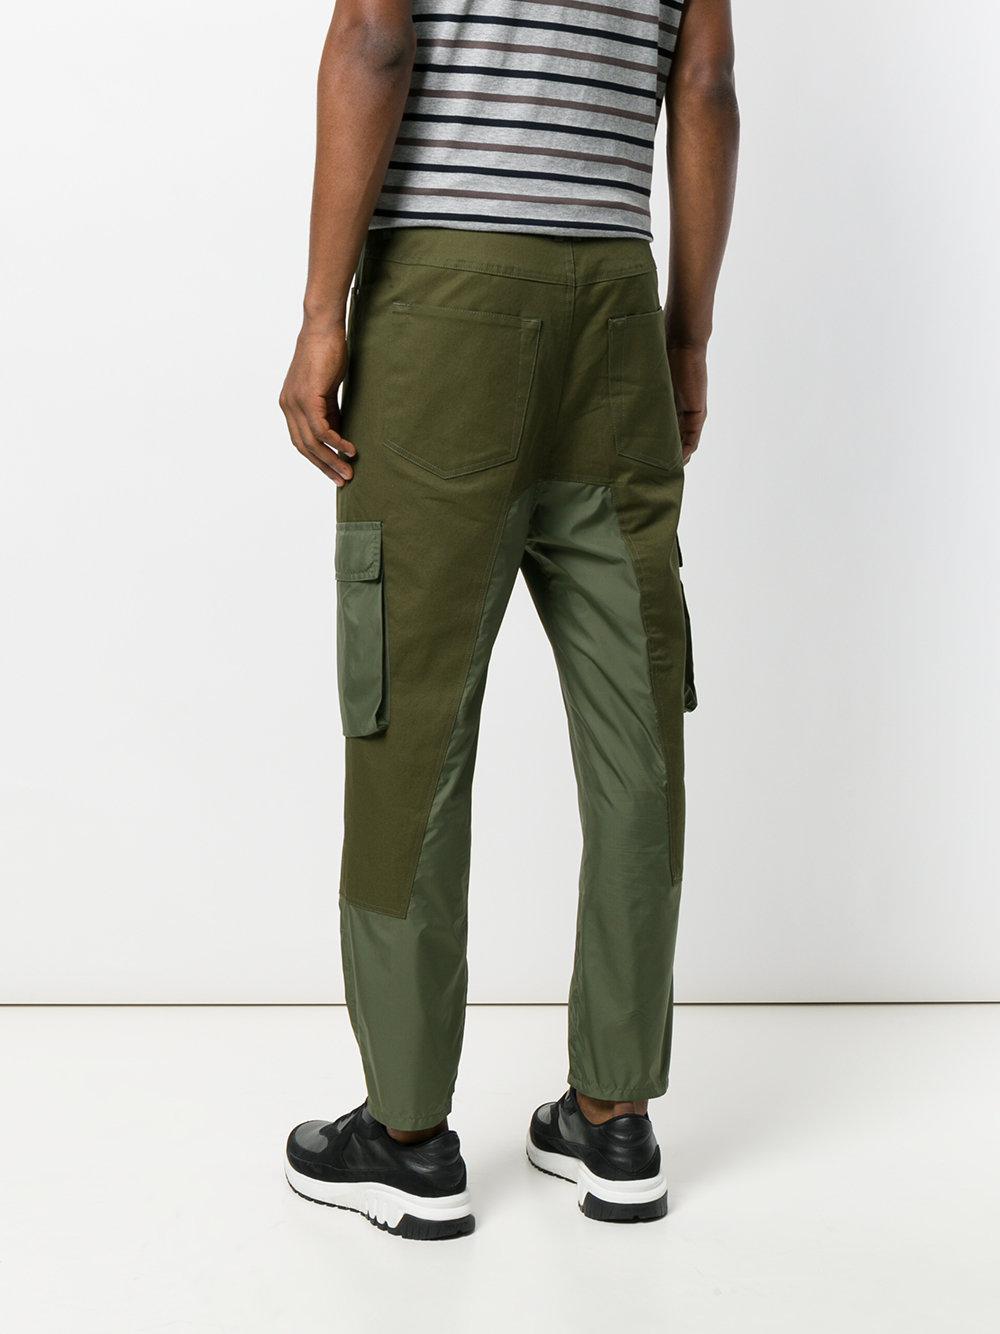 Diesel Black Gold Cotton Cargo Pants in Green for Men - Lyst